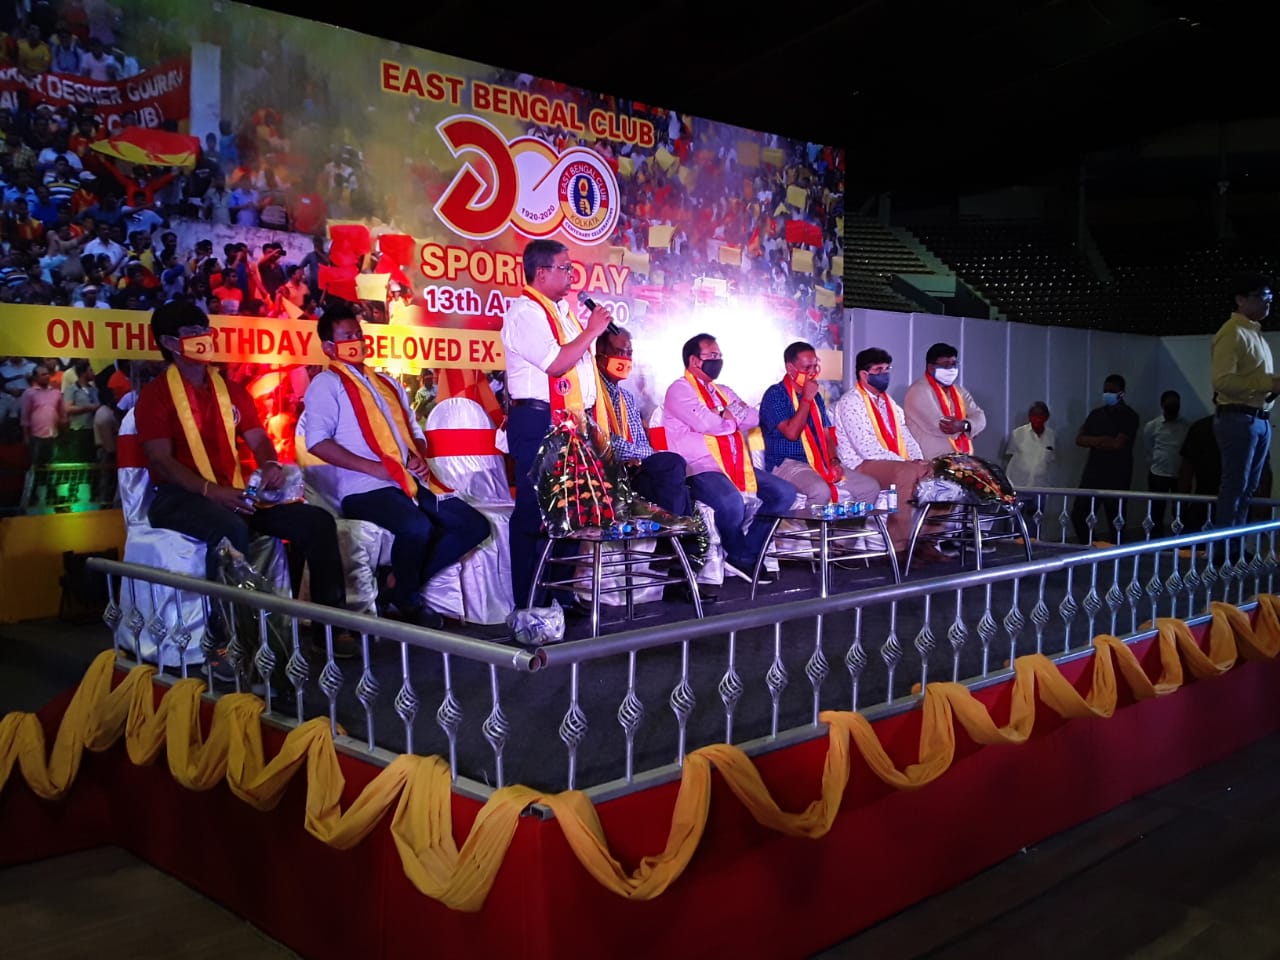 East Bengal Club: Sports Day Celebration 2020